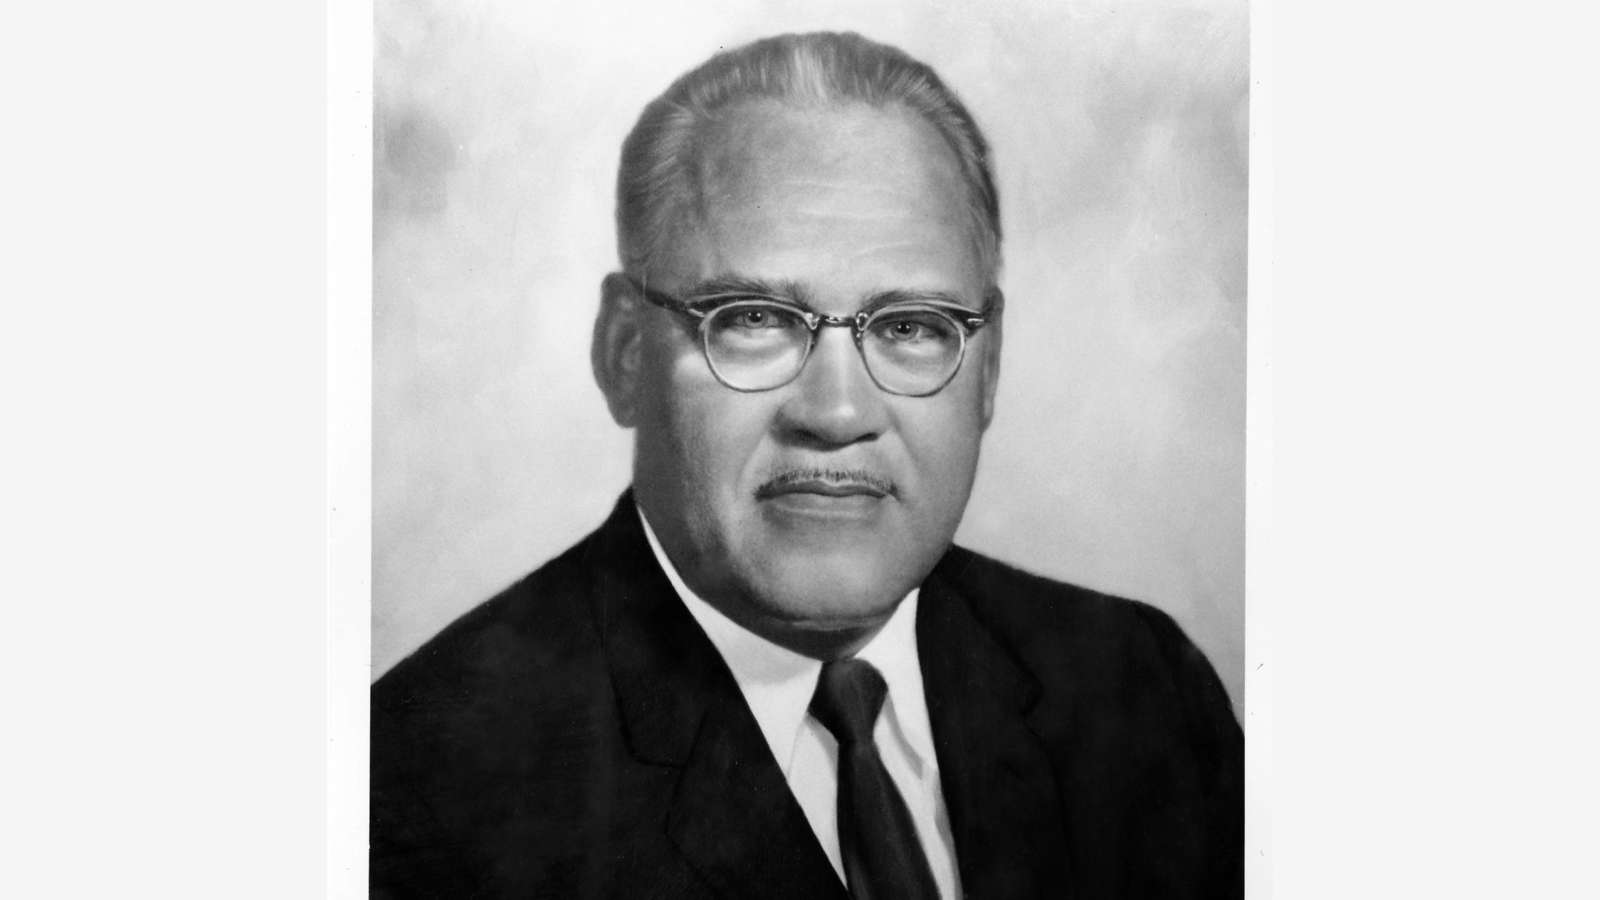 Tuskegee Institute president Dr. Frederick Douglass Patterson